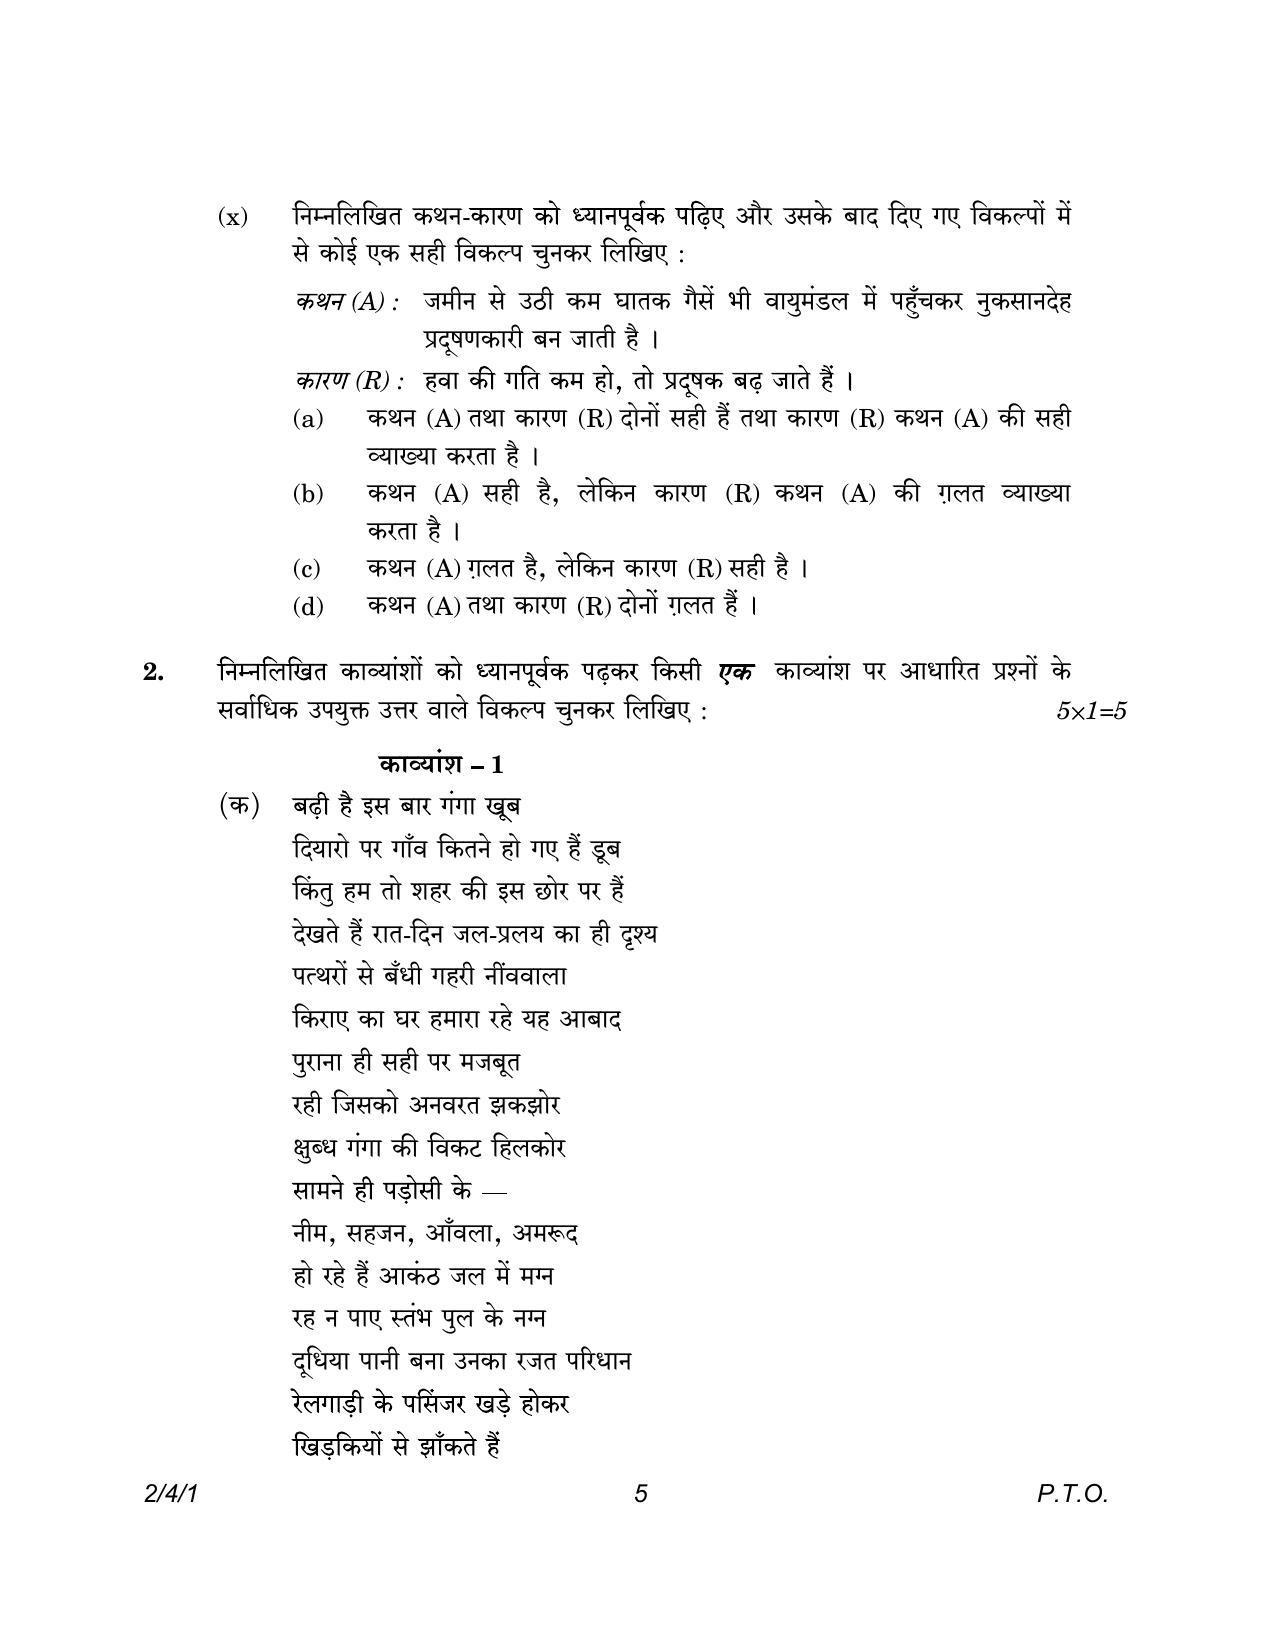 CBSE Class 12 2-4-1 Hindi Core version 2023 Question Paper - Page 5